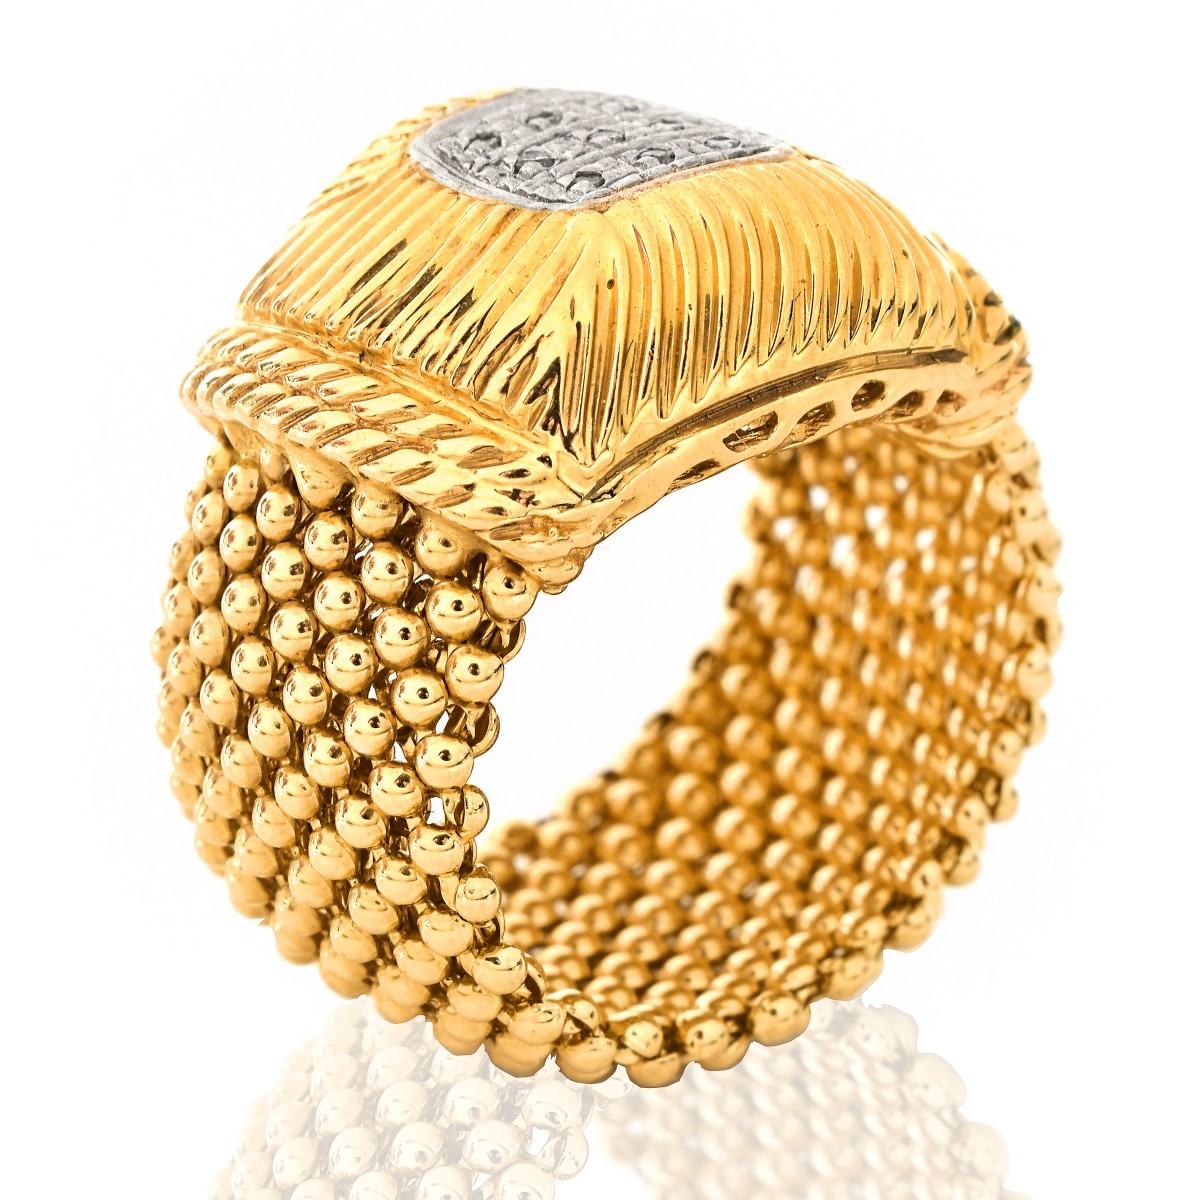 Italian 14K Gold and Diamond Ring